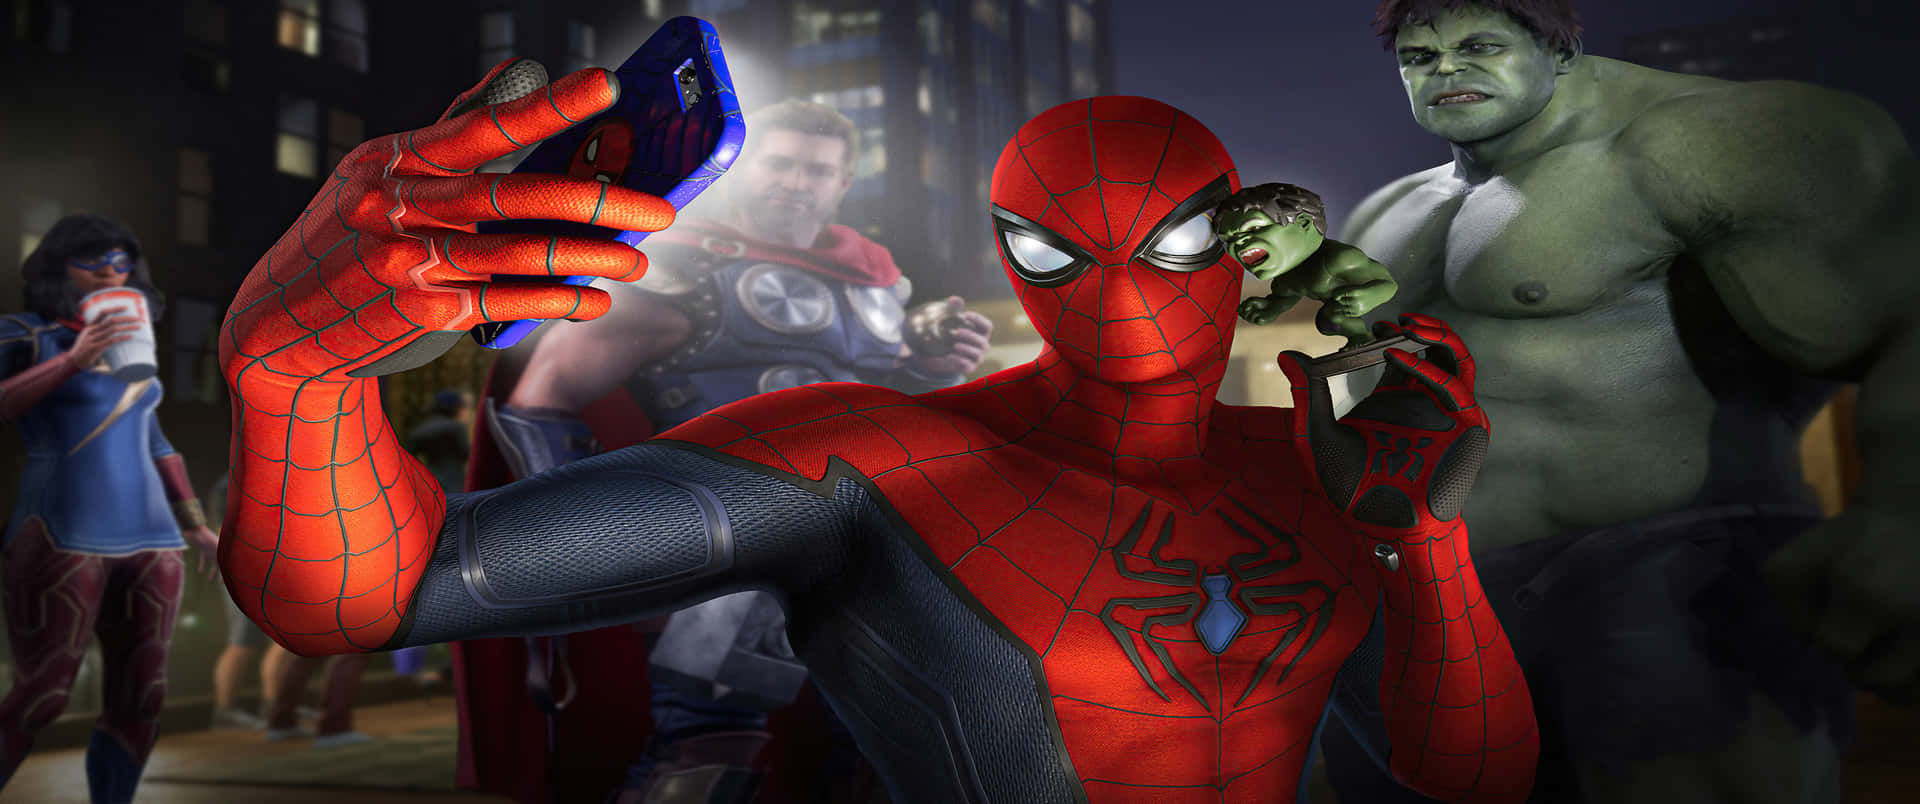 Spider Man Selfie Marvel 3440x1440 Wallpaper